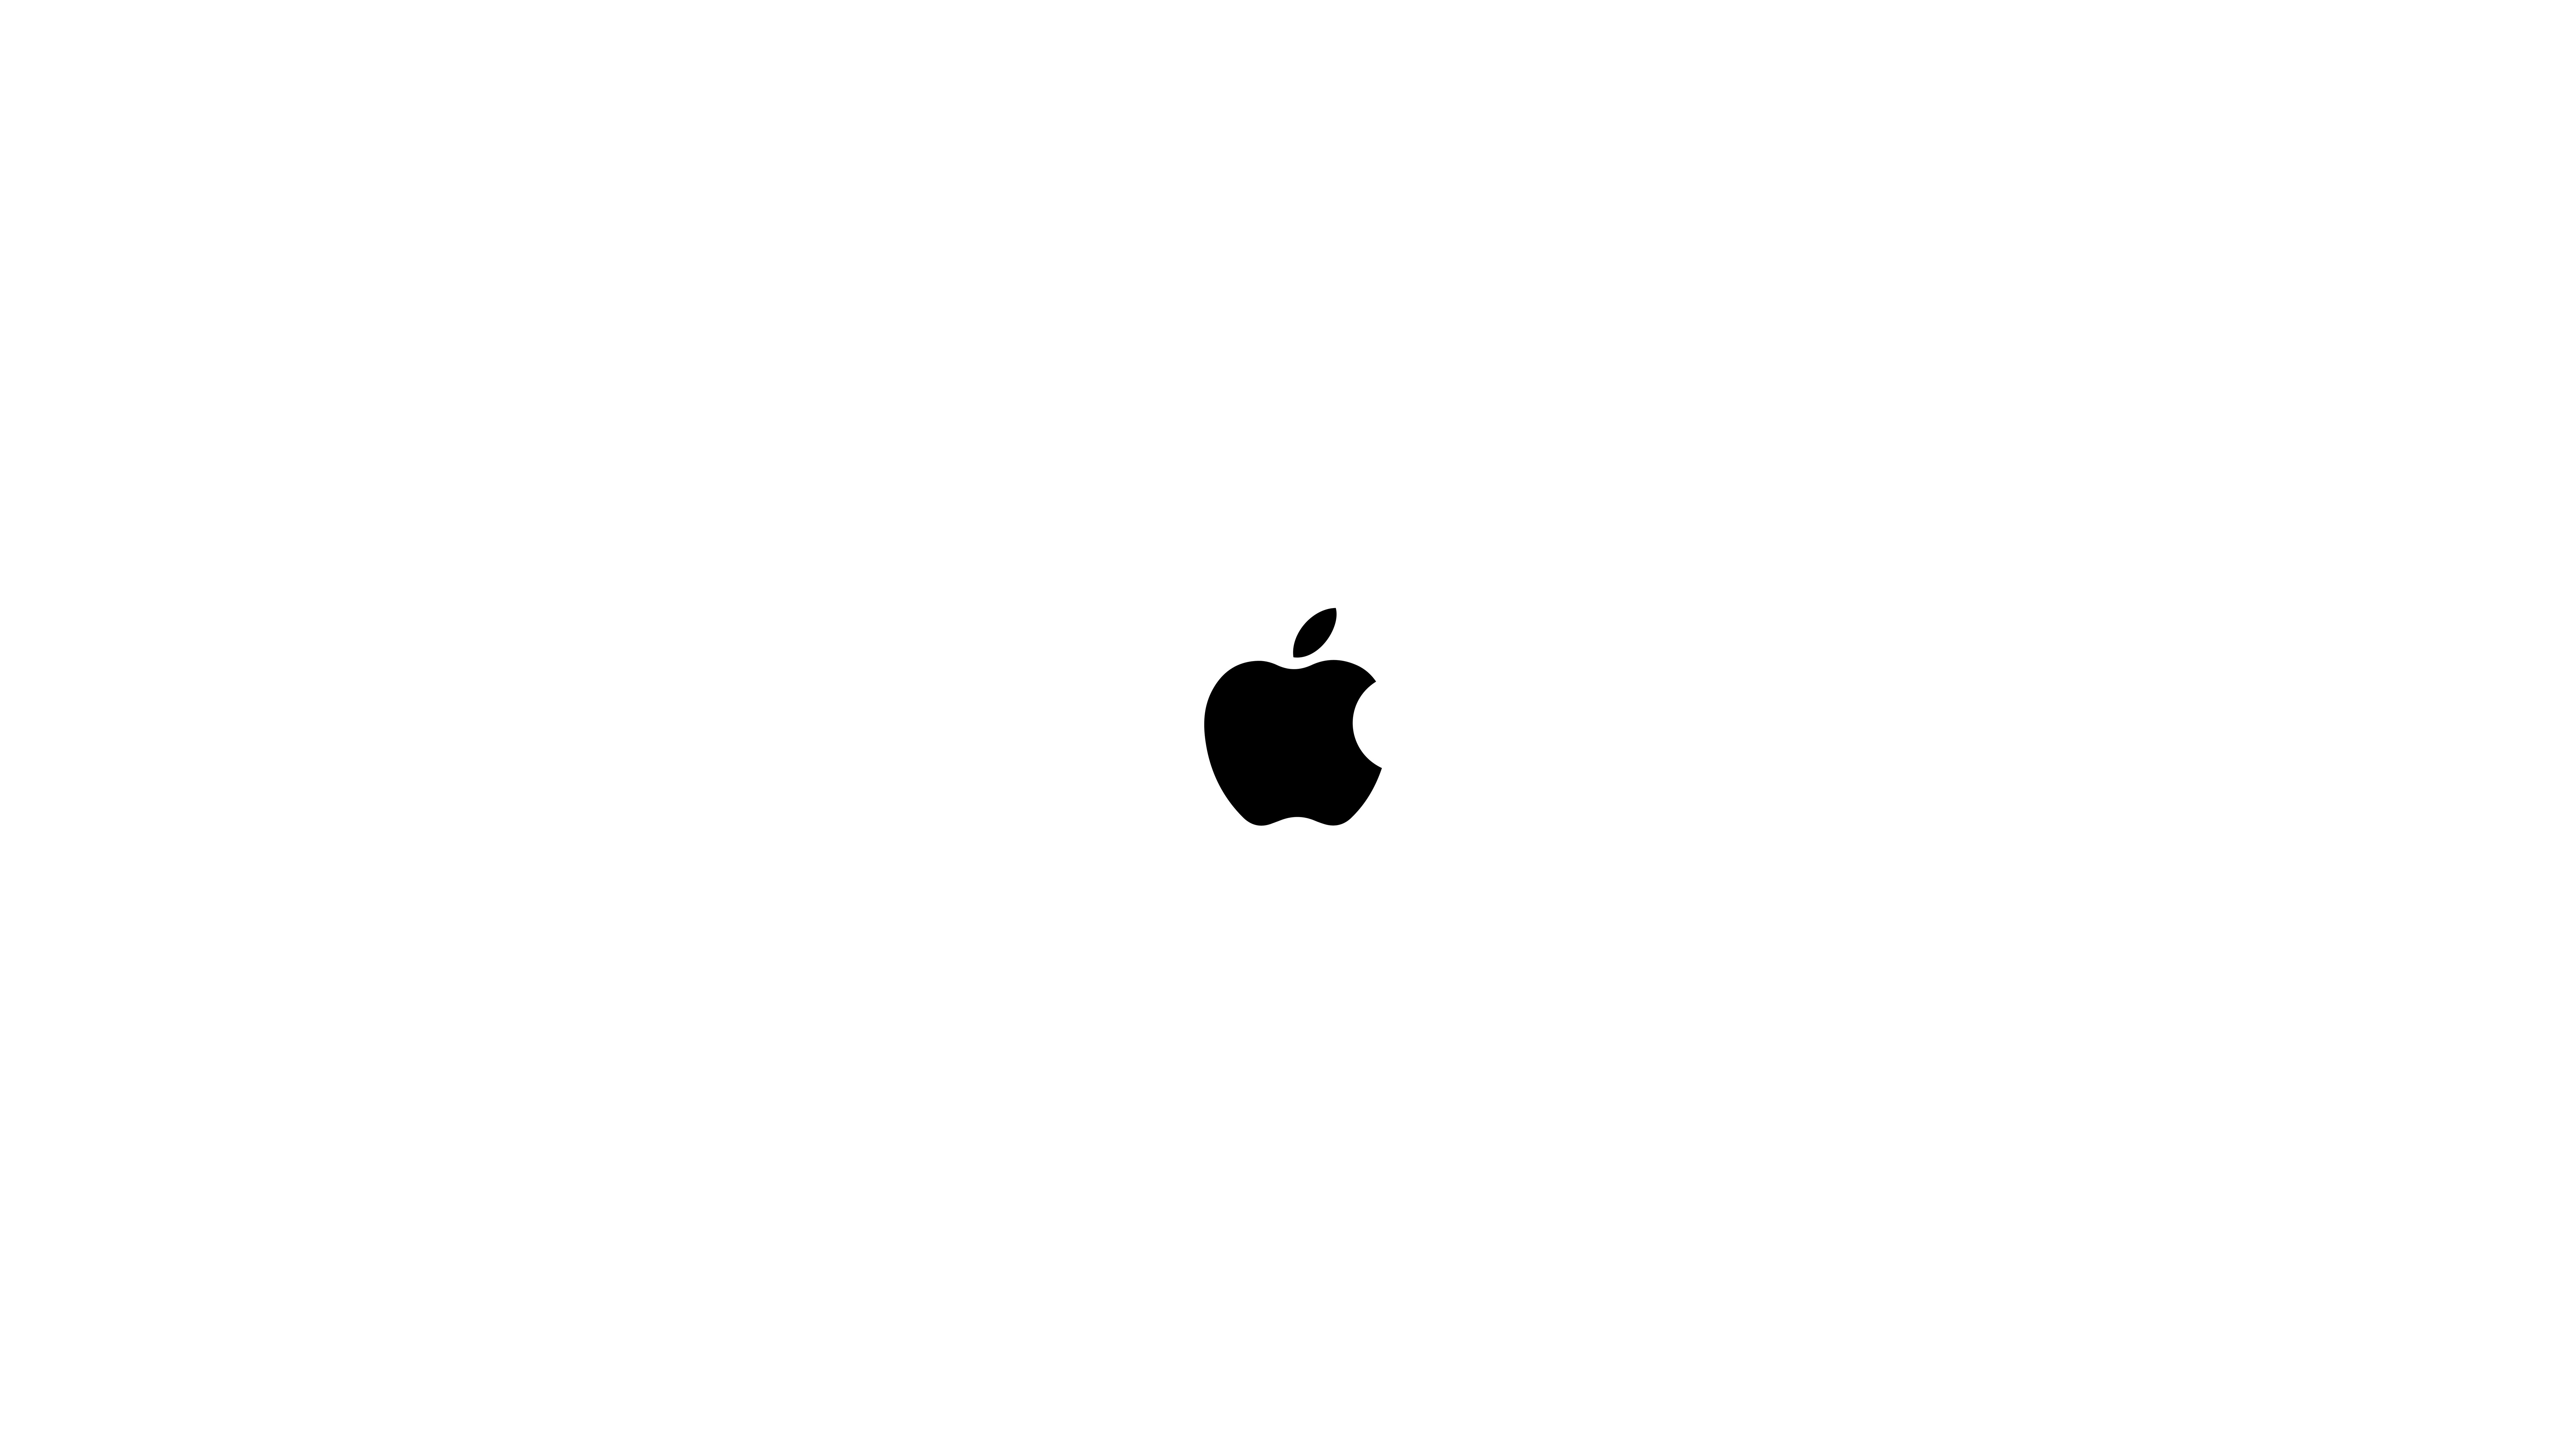 600+] Apple Logo Wallpapers | Wallpapers.com